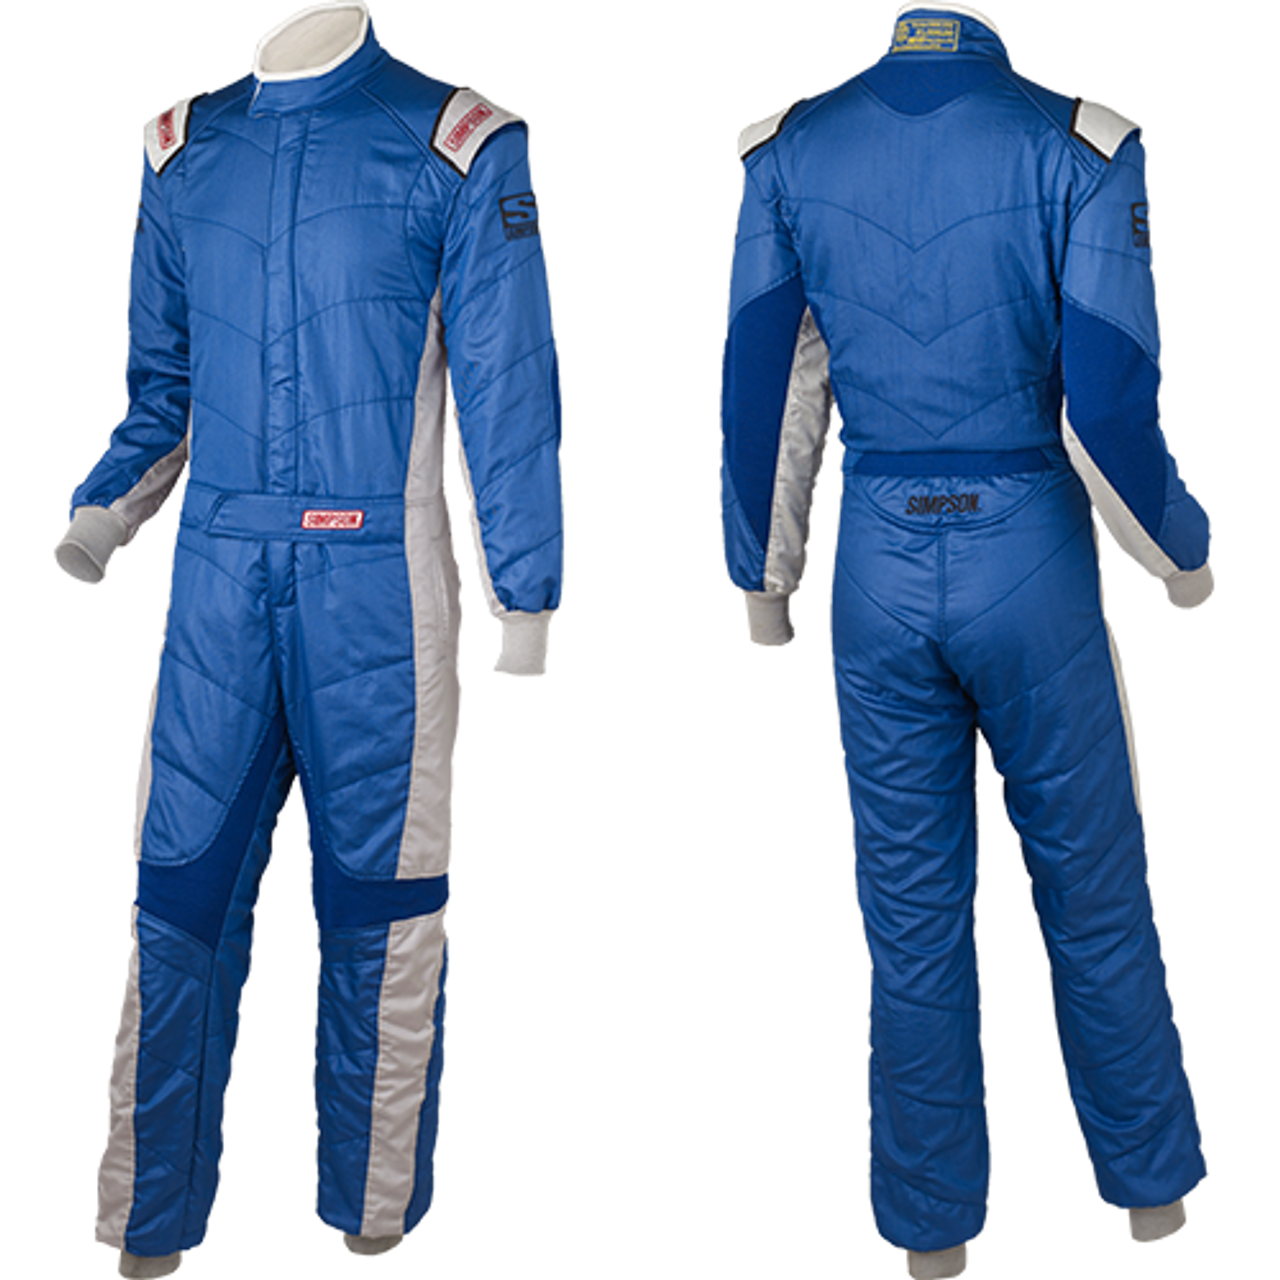 Simpson Racing SFI ADV-TX Racing Suit